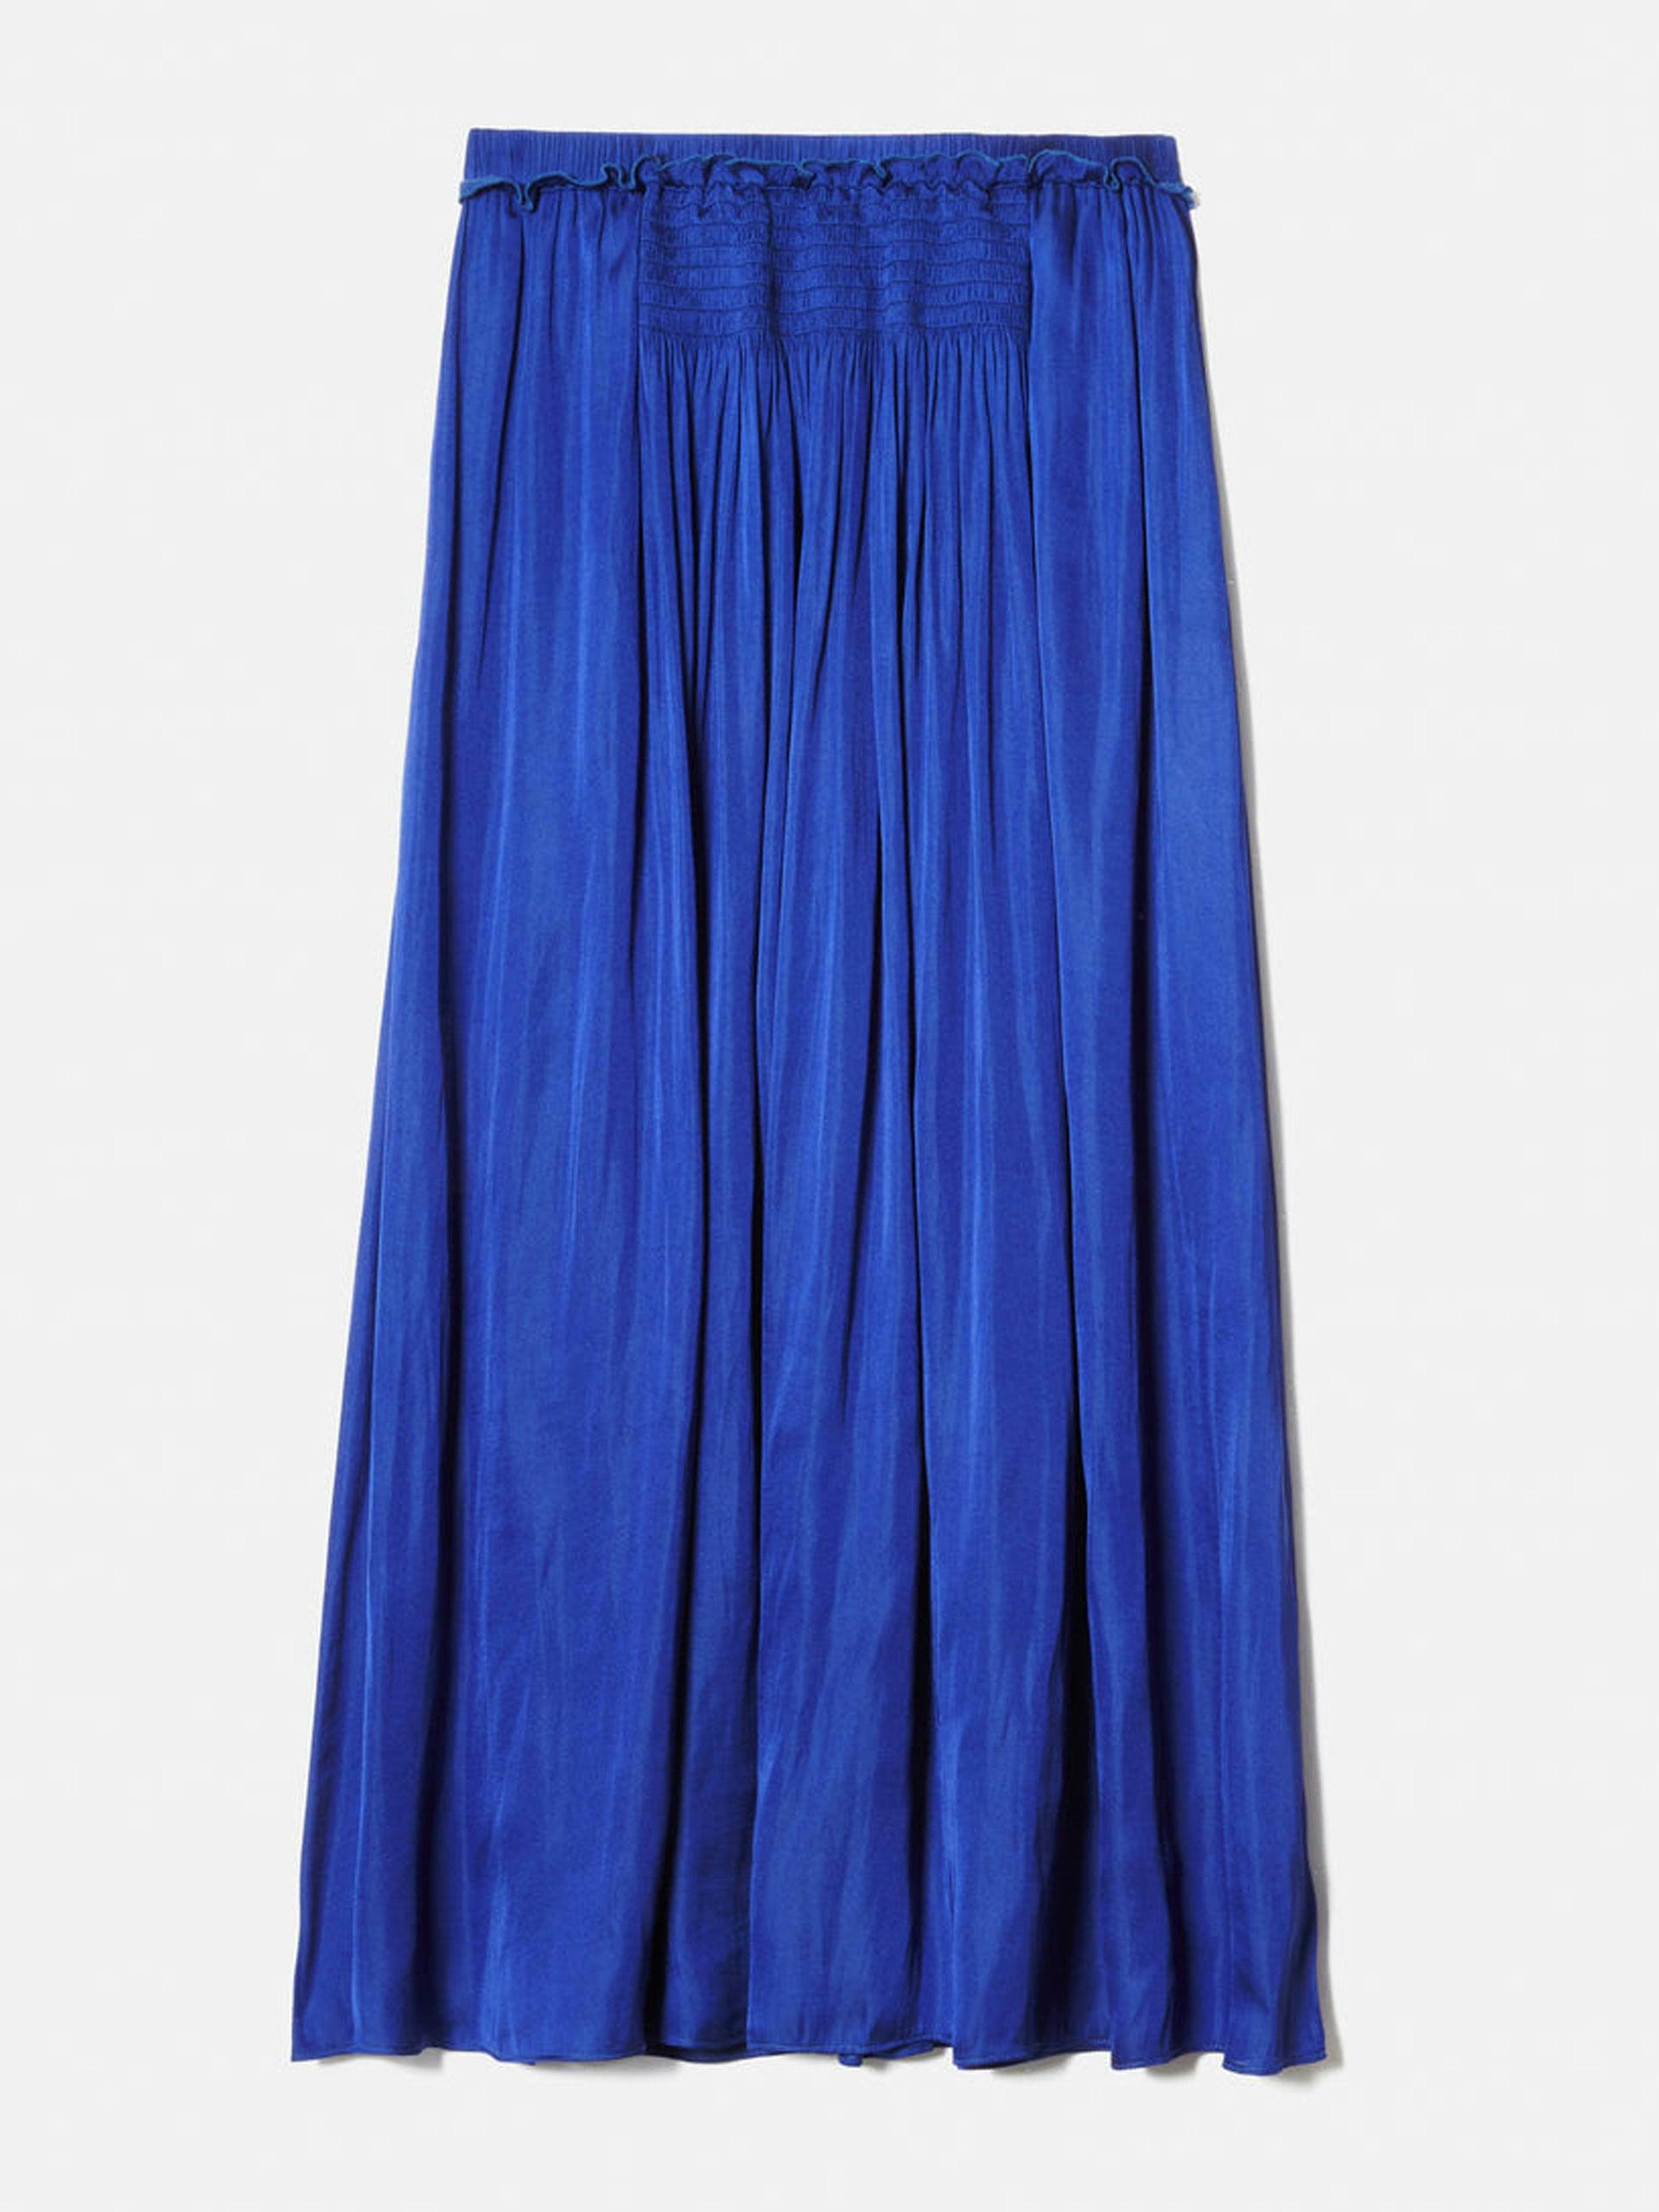 Blue satin drape skirt